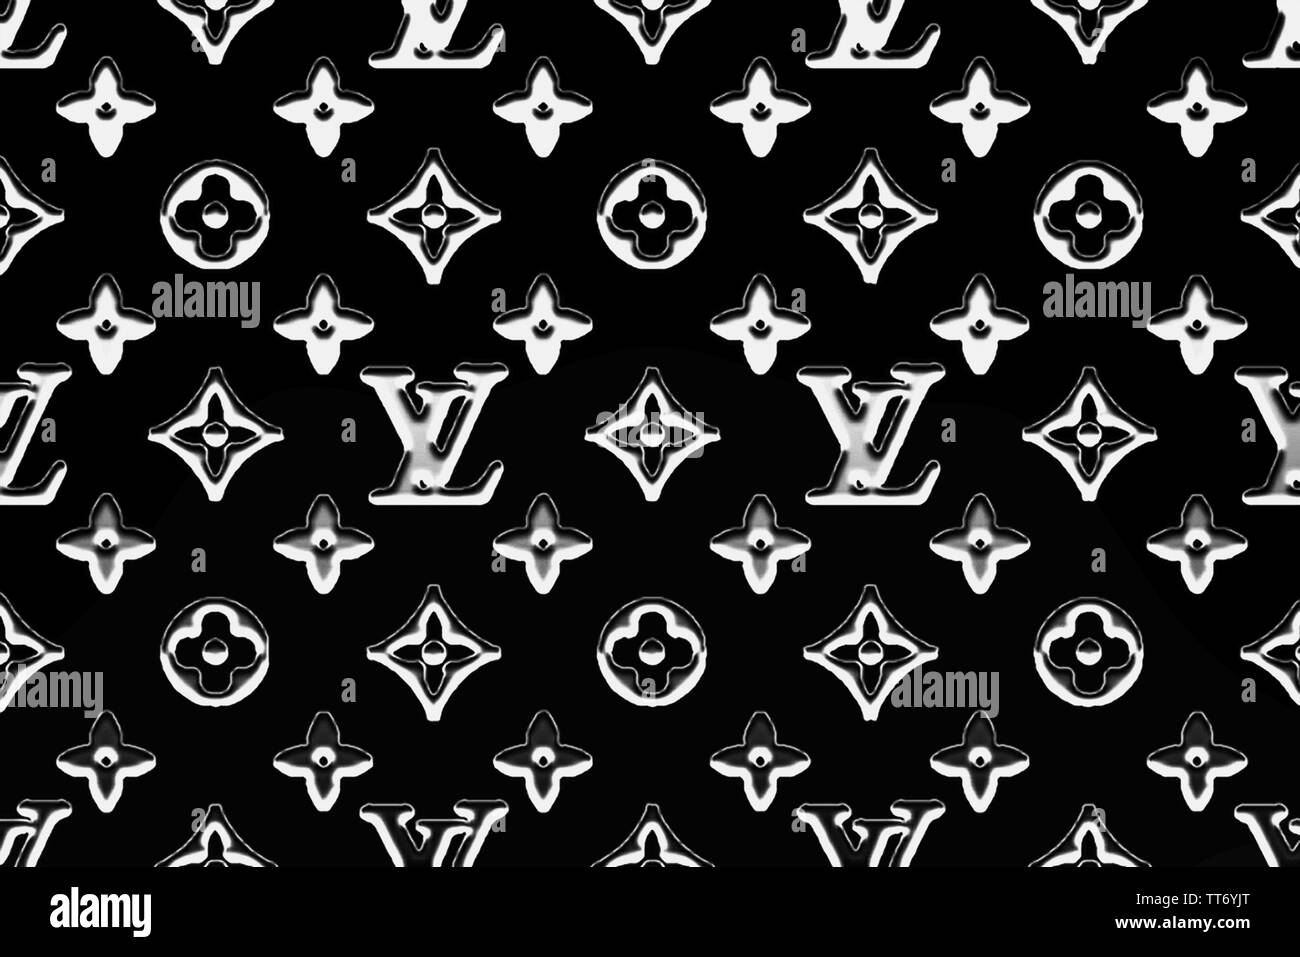 Louis Vuitton wallpaper background iconic luxury brand Stock Photo